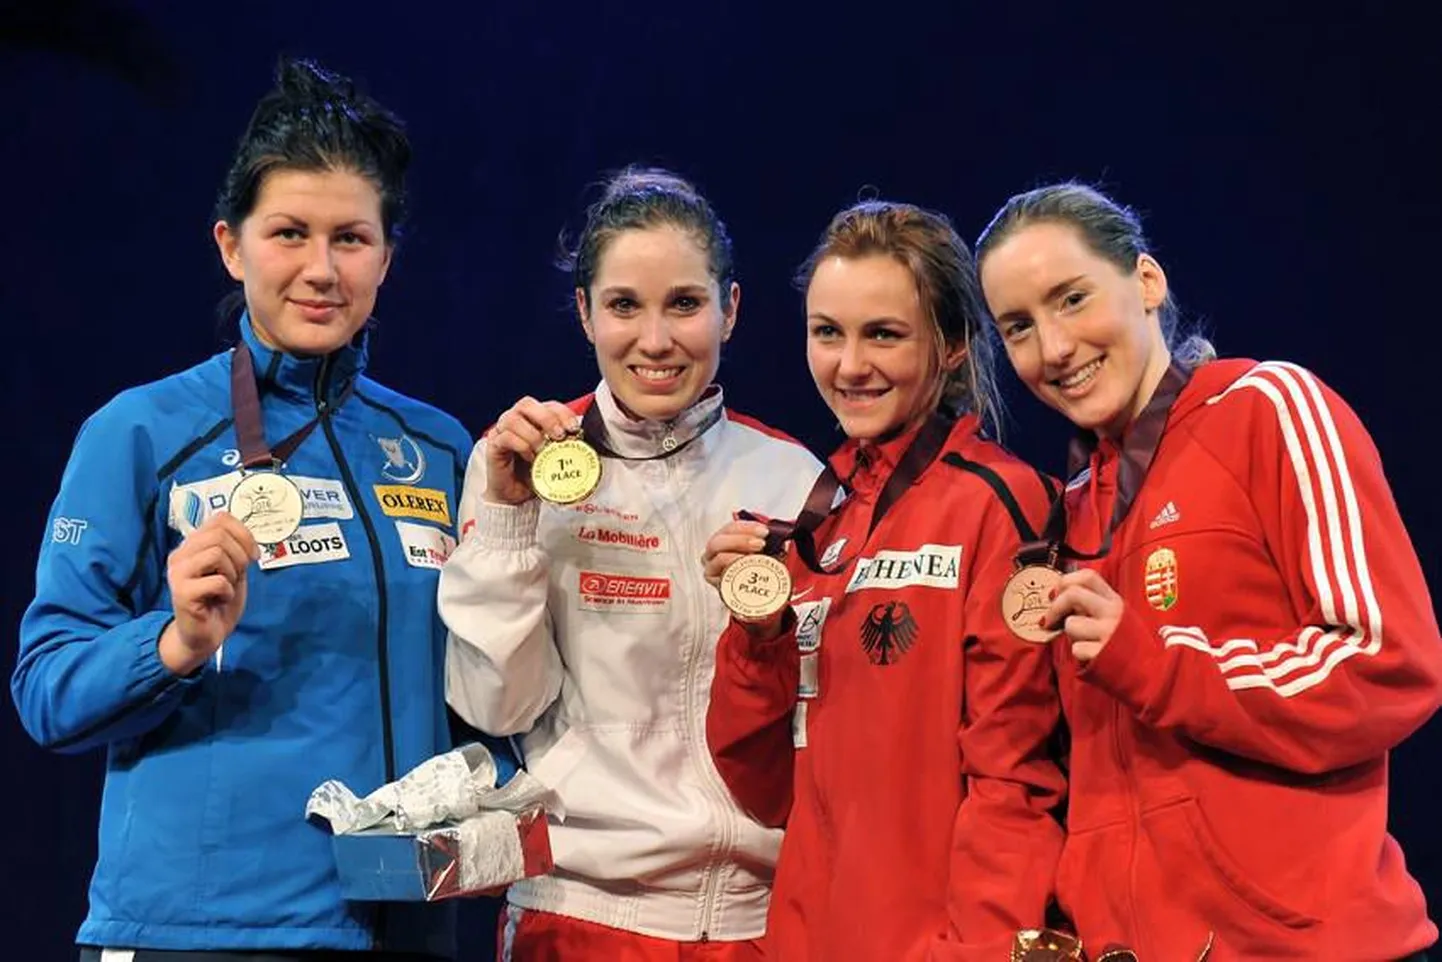 Vasakult: Julia Beljajeva, Tiffany Geroudet, Monika Sozanska, Julia Revesz.